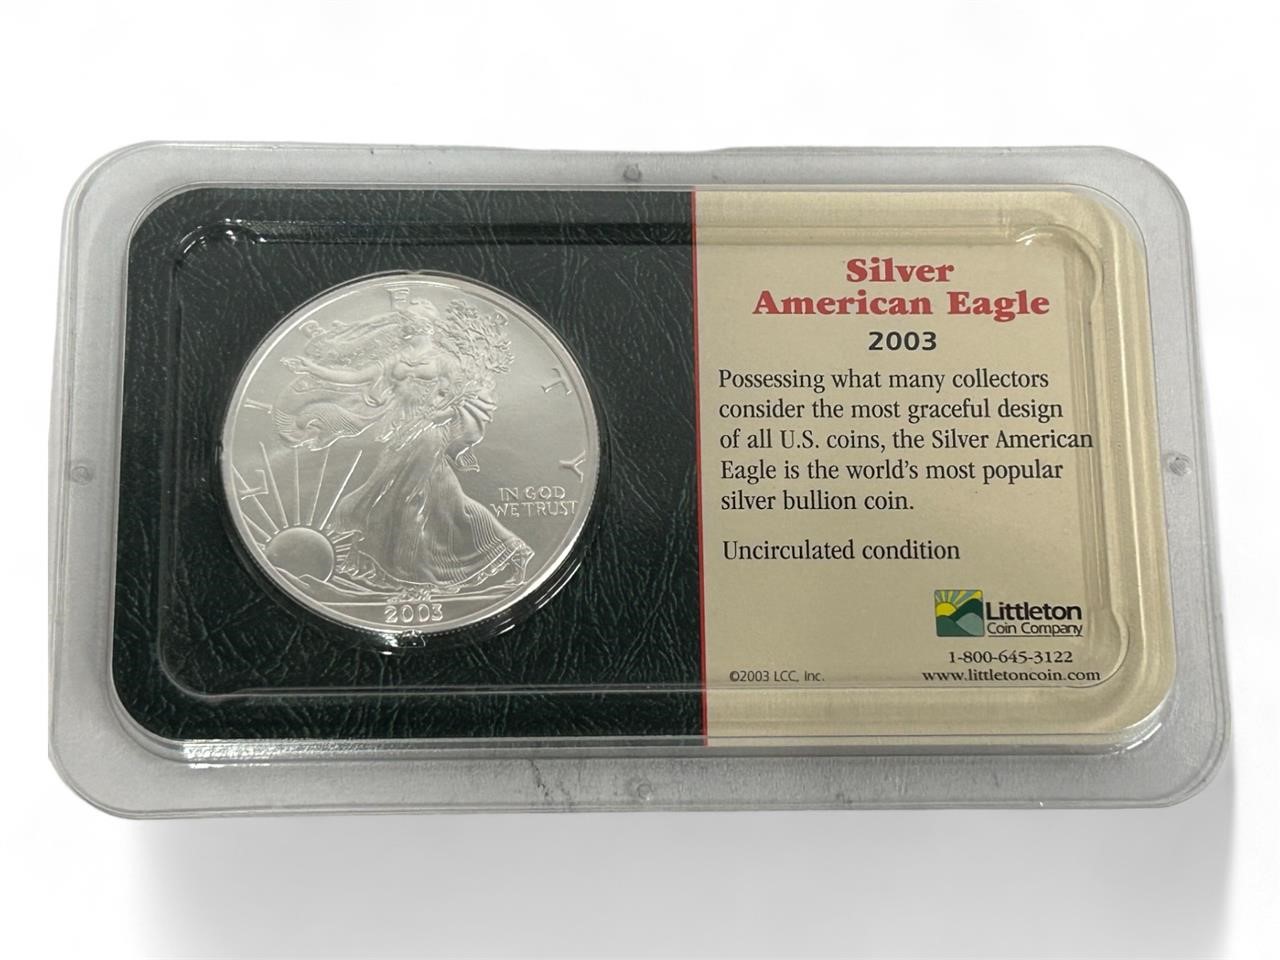 2003 Silver American Eagle - Uncirculated